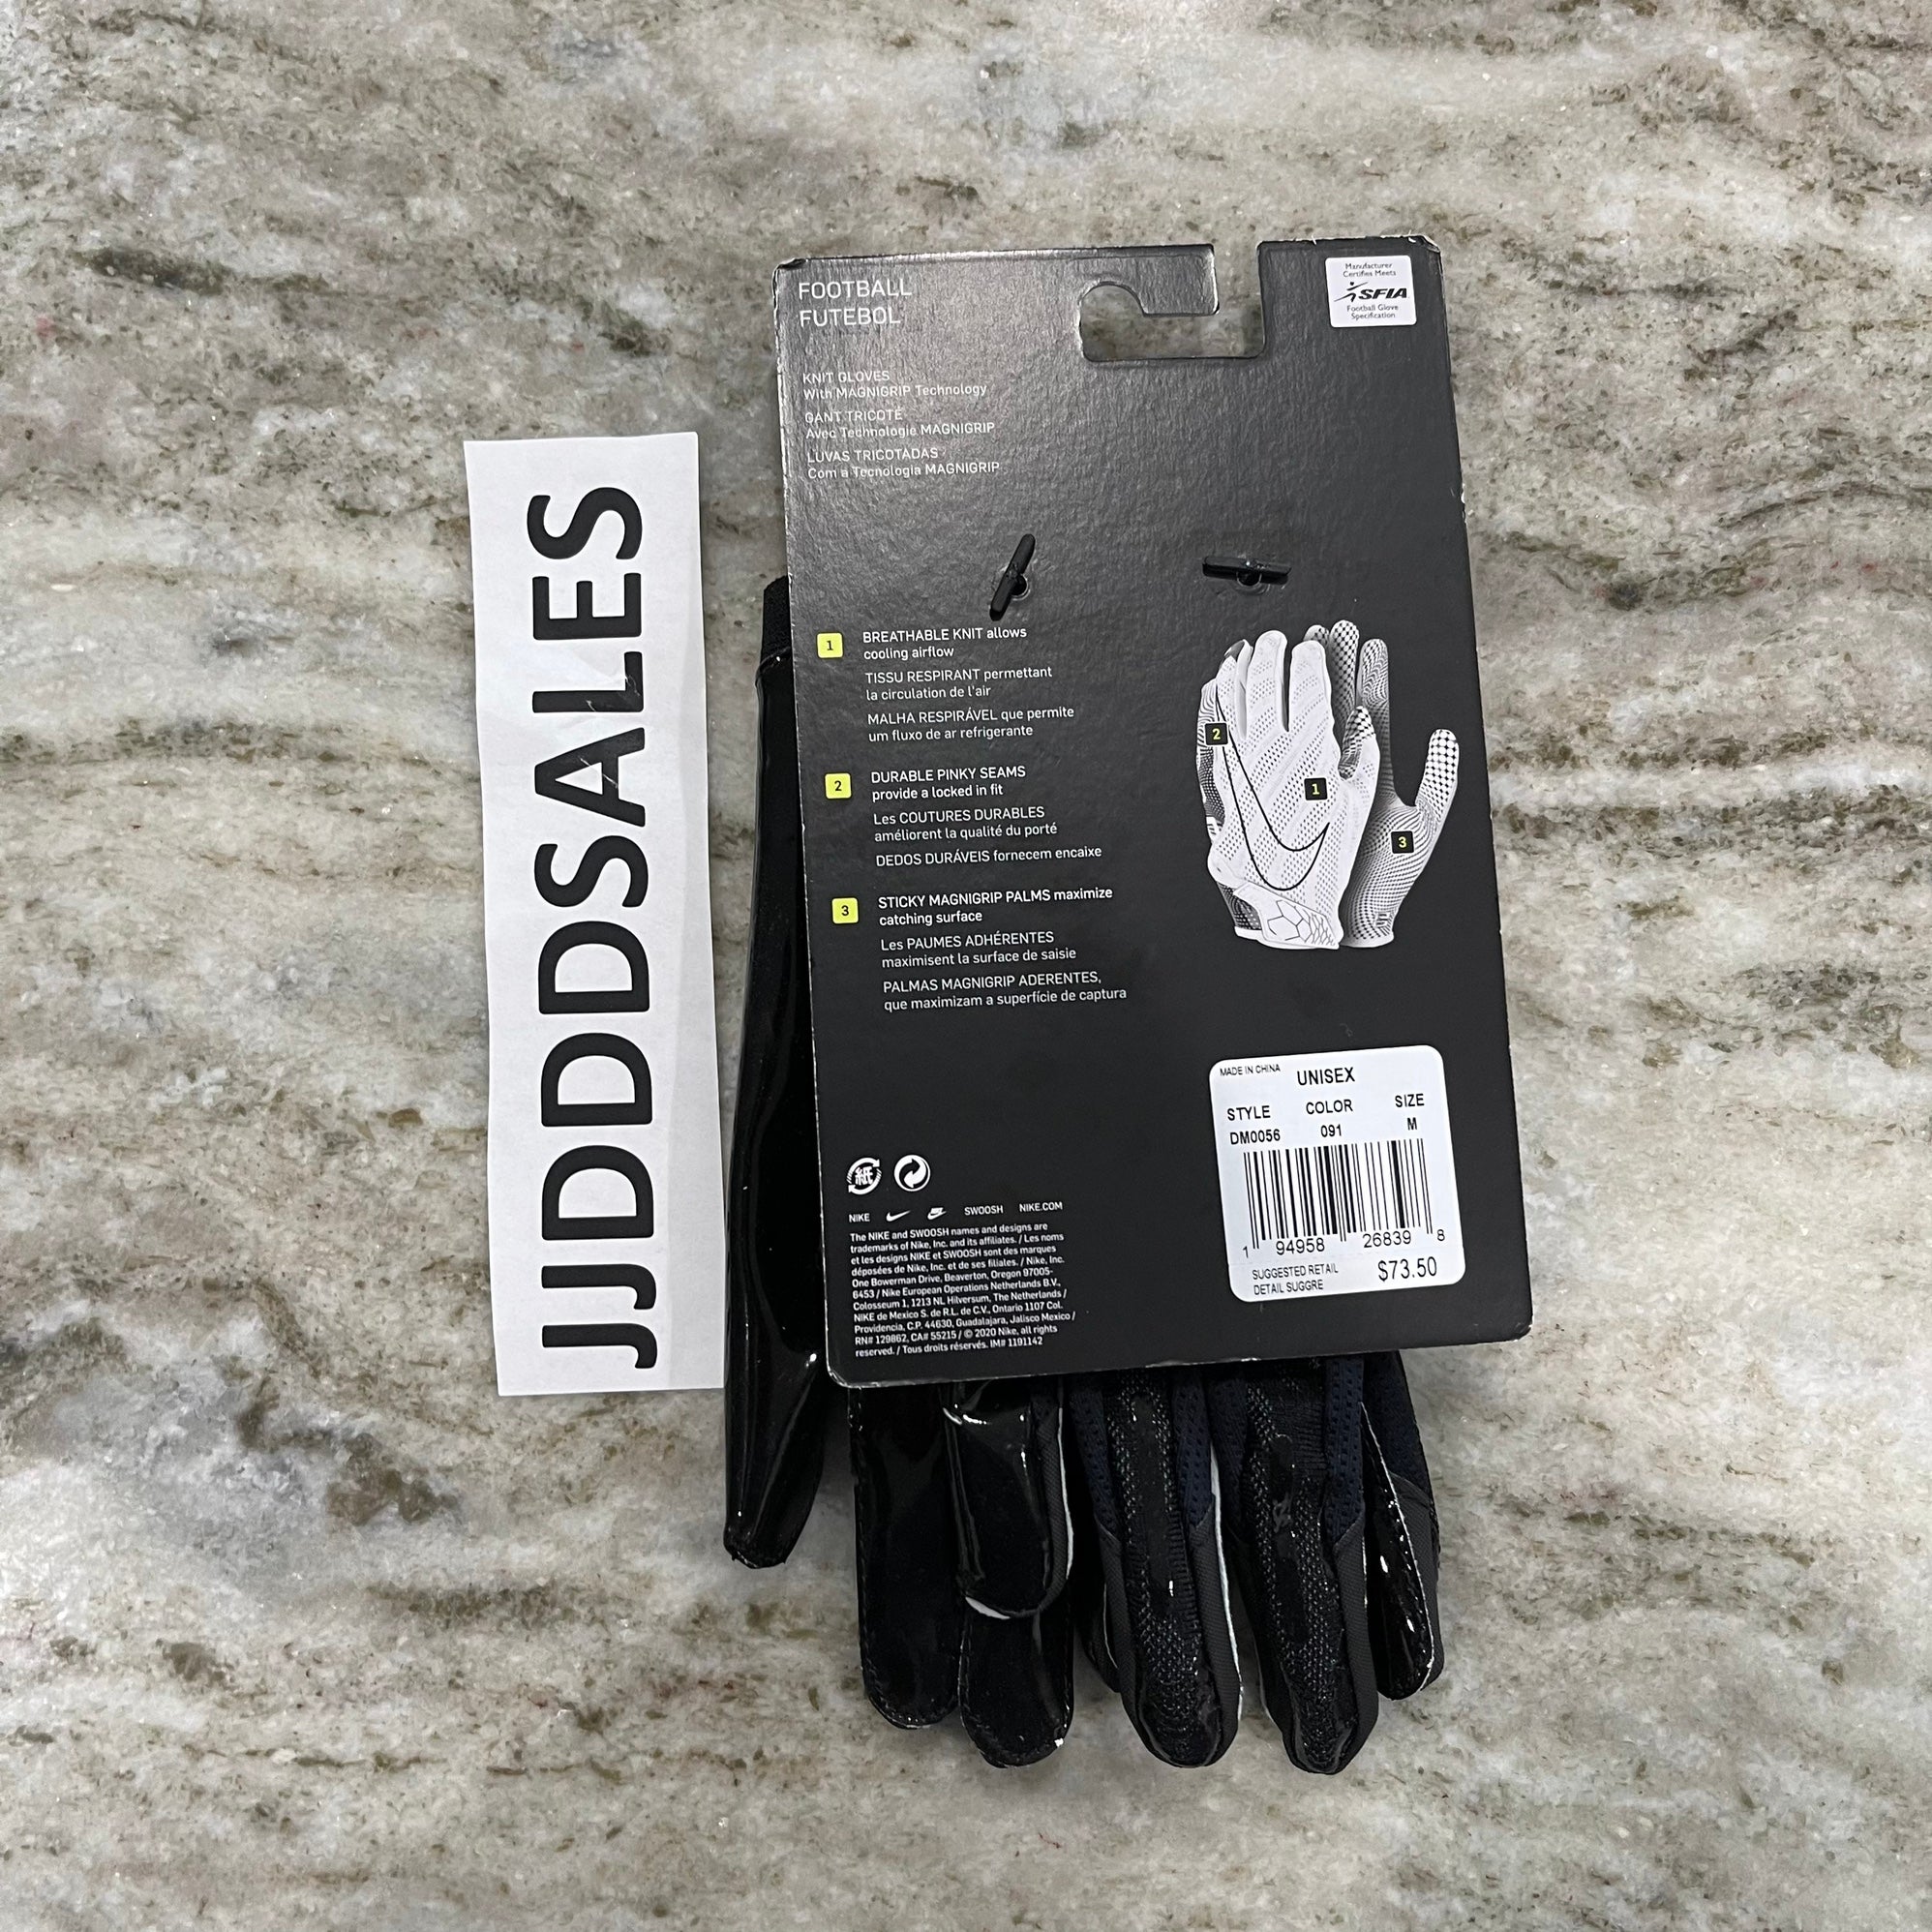 hail Quite Spider Nike Vapor Knit Elite Magnagrip Football Receiver Gloves Black Size Medium  DM0056-091 $73.50 NWT | SidelineSwap